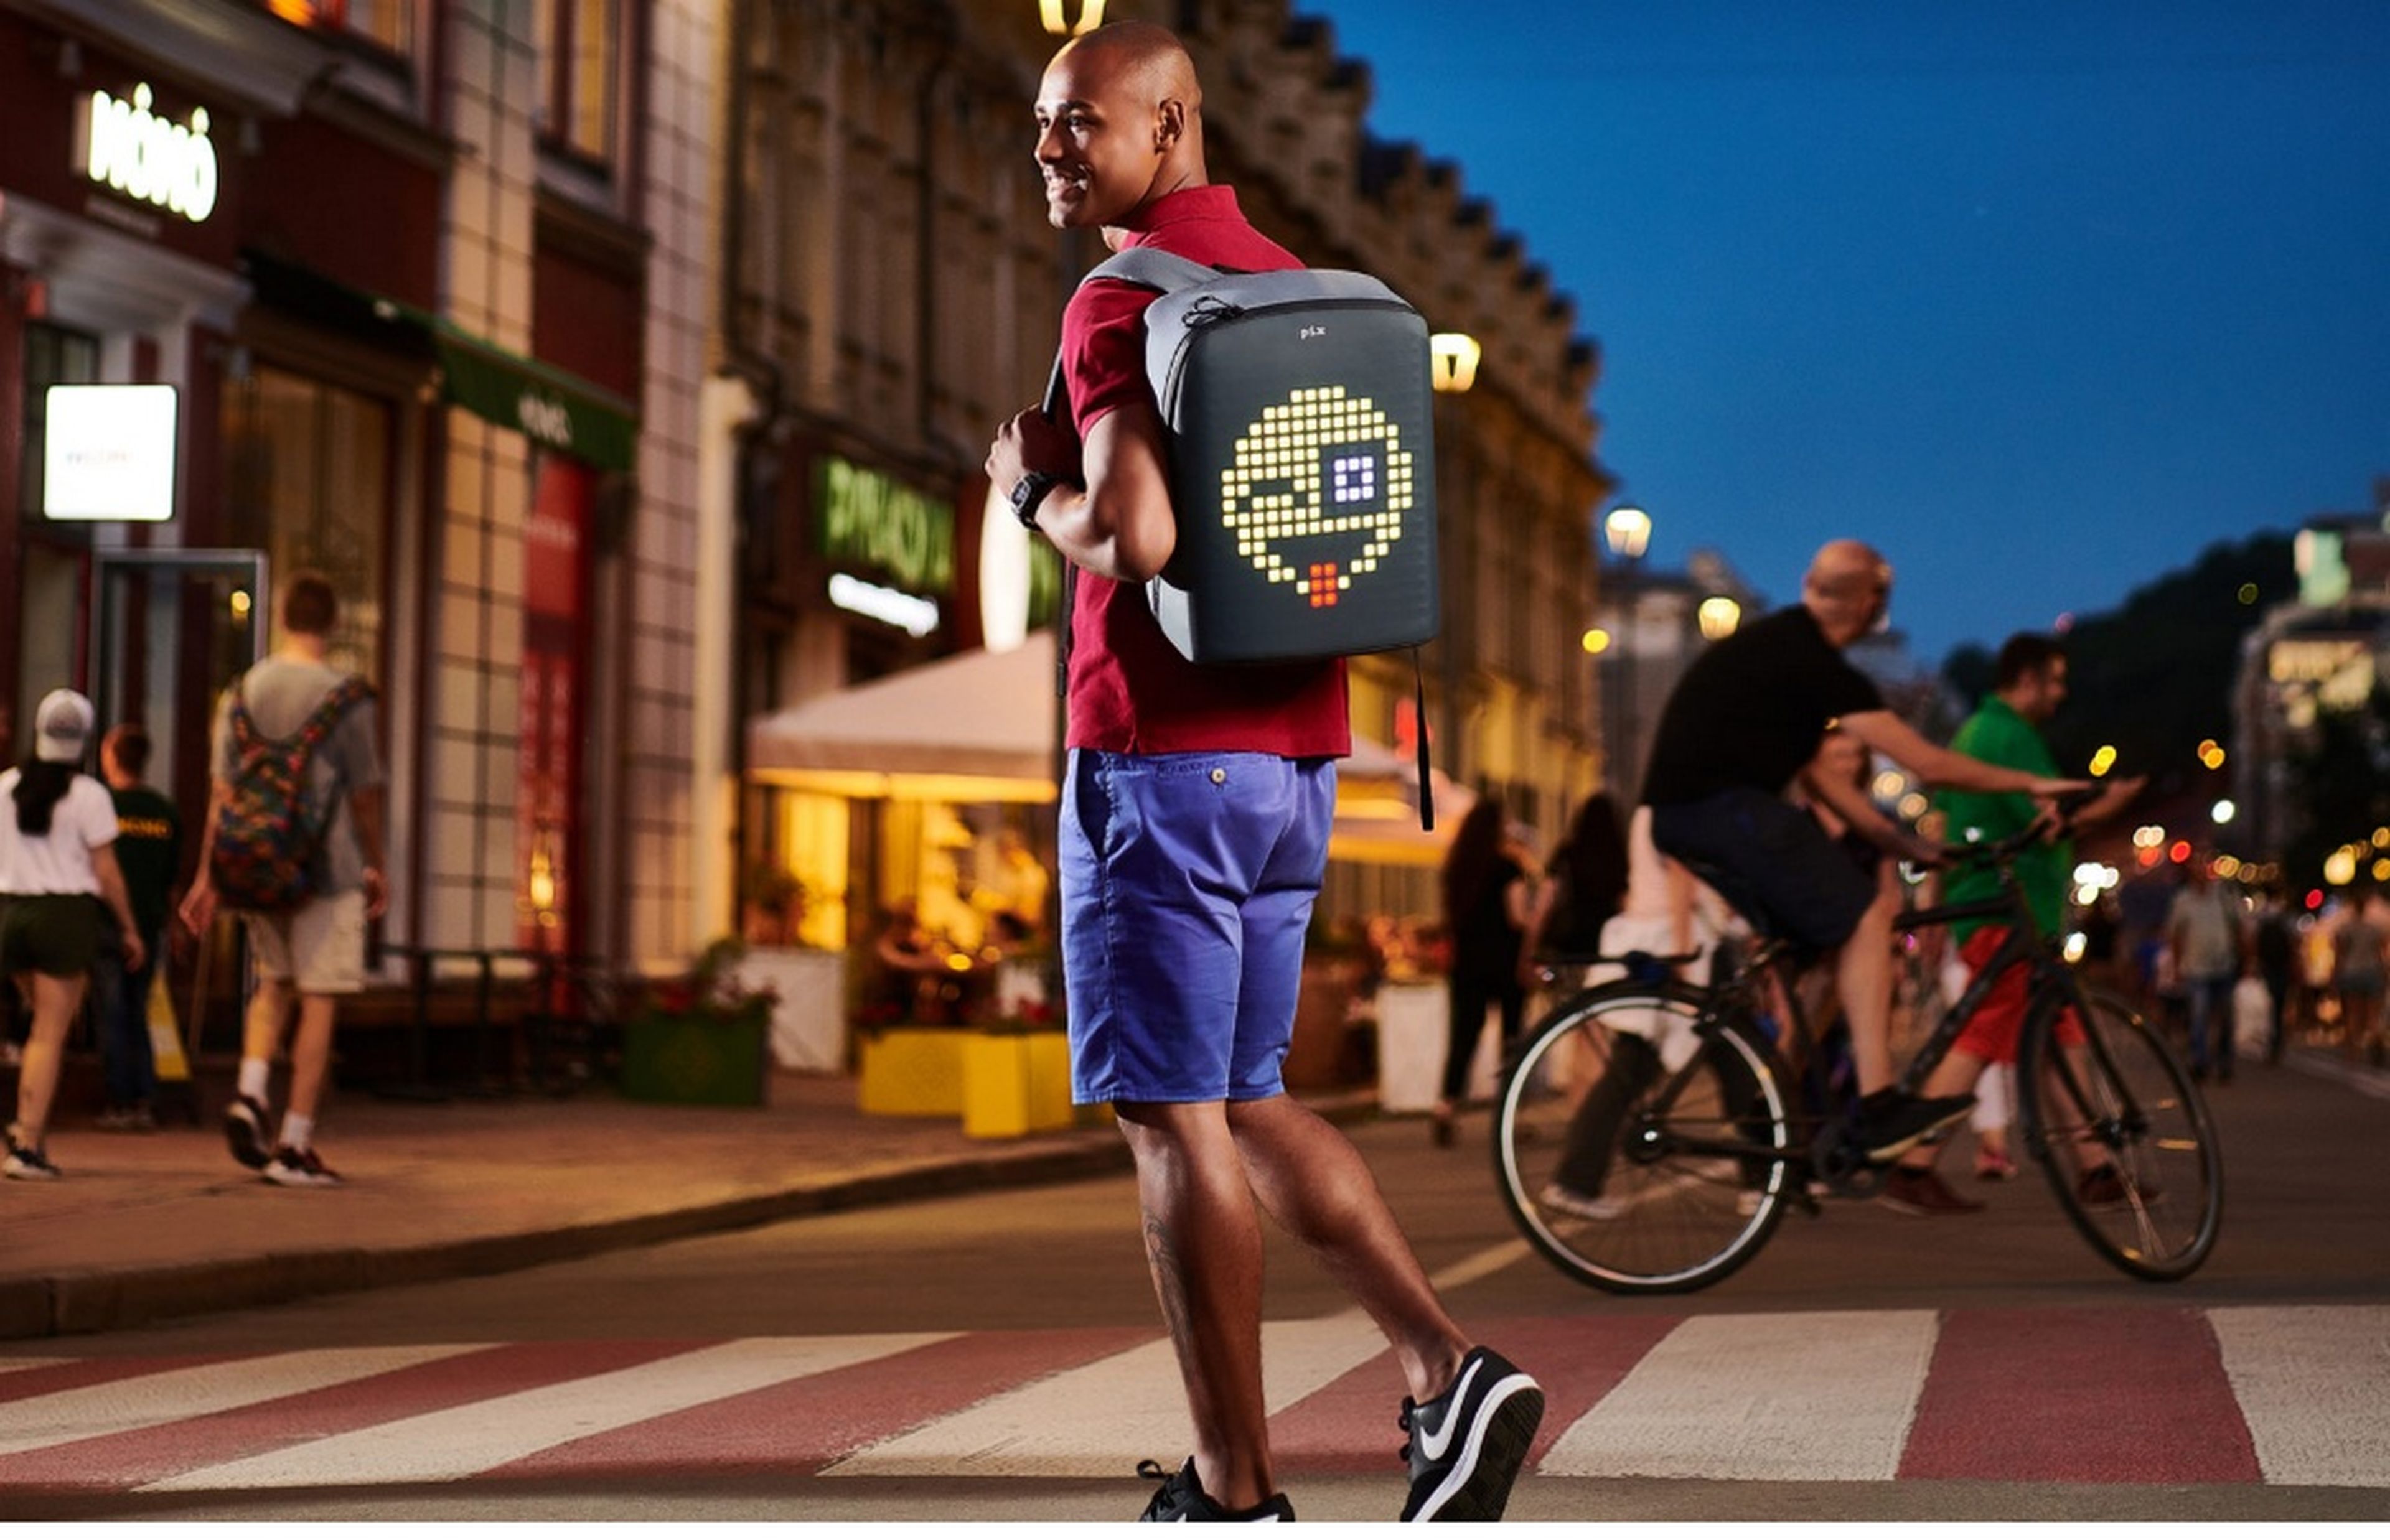 Pix, la mochila con un panel LED que puedes personalizar